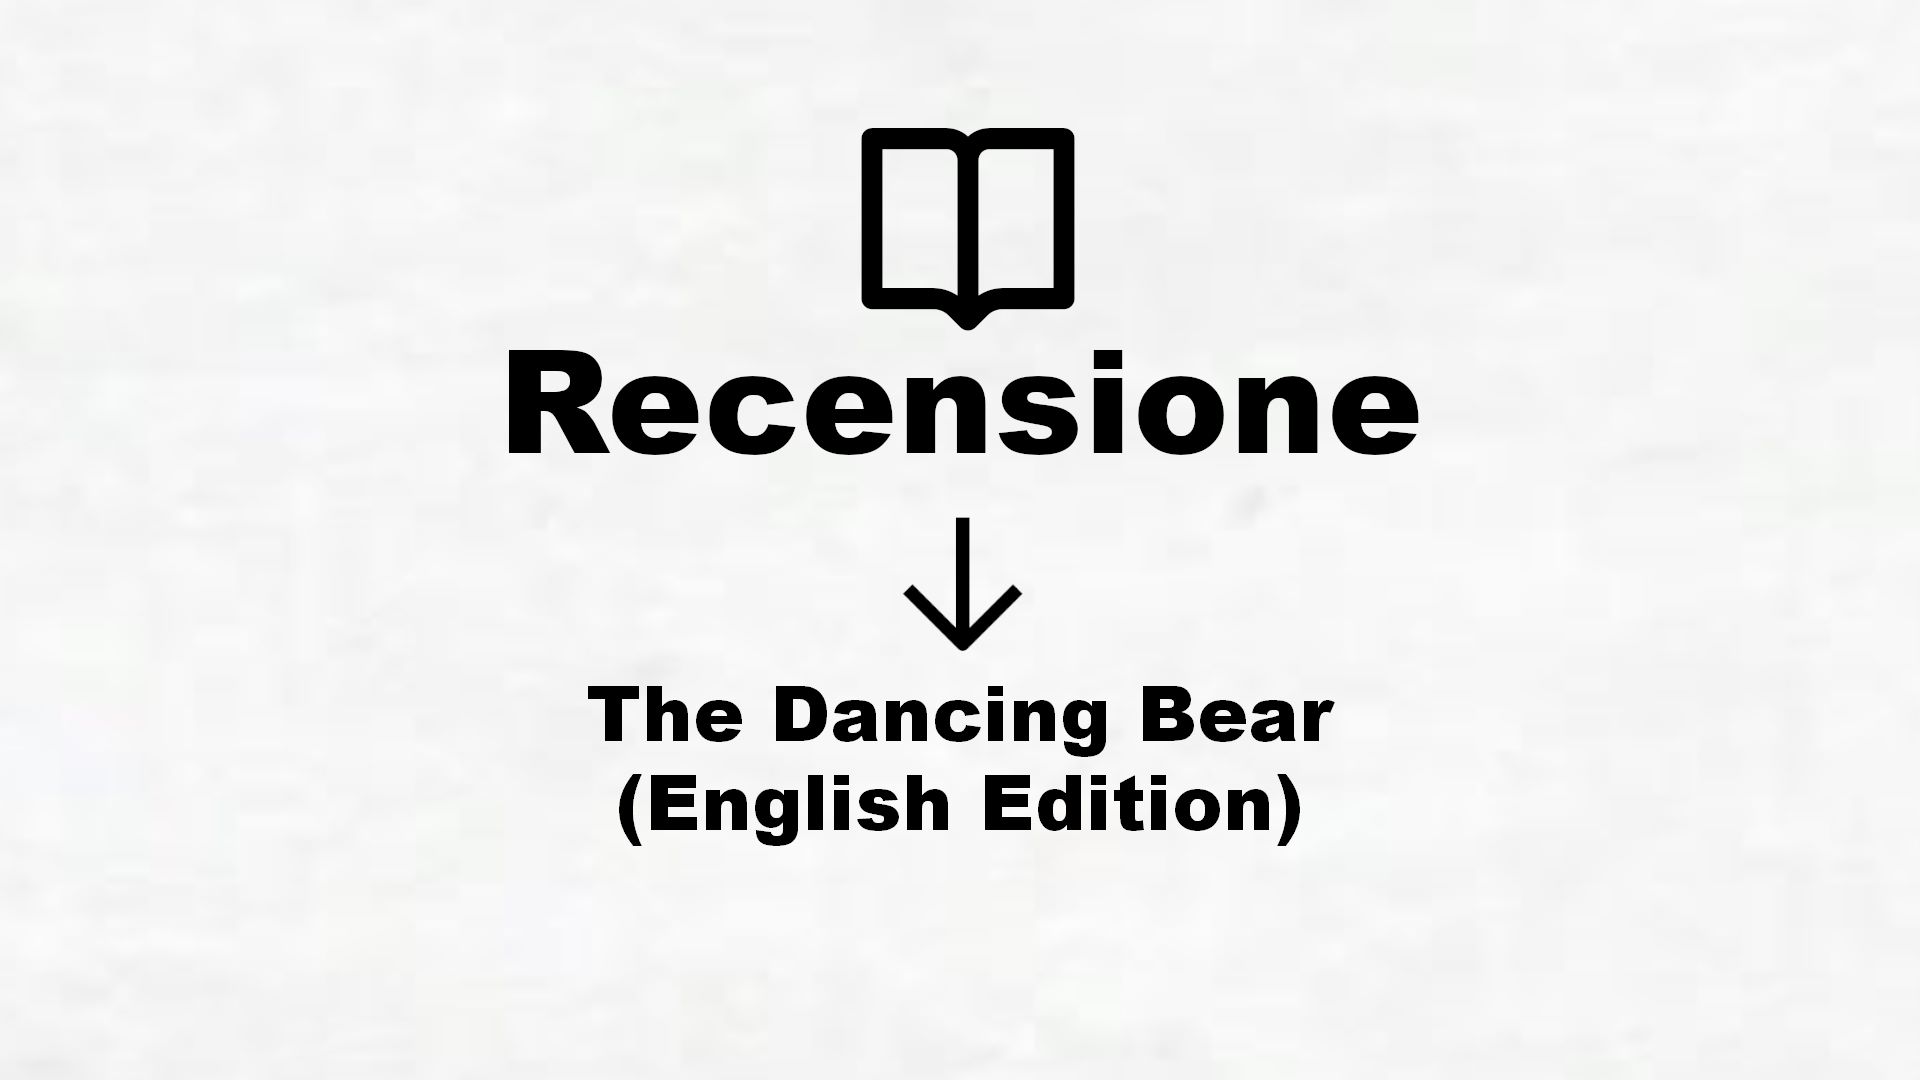 The Dancing Bear (English Edition) – Recensione Libro